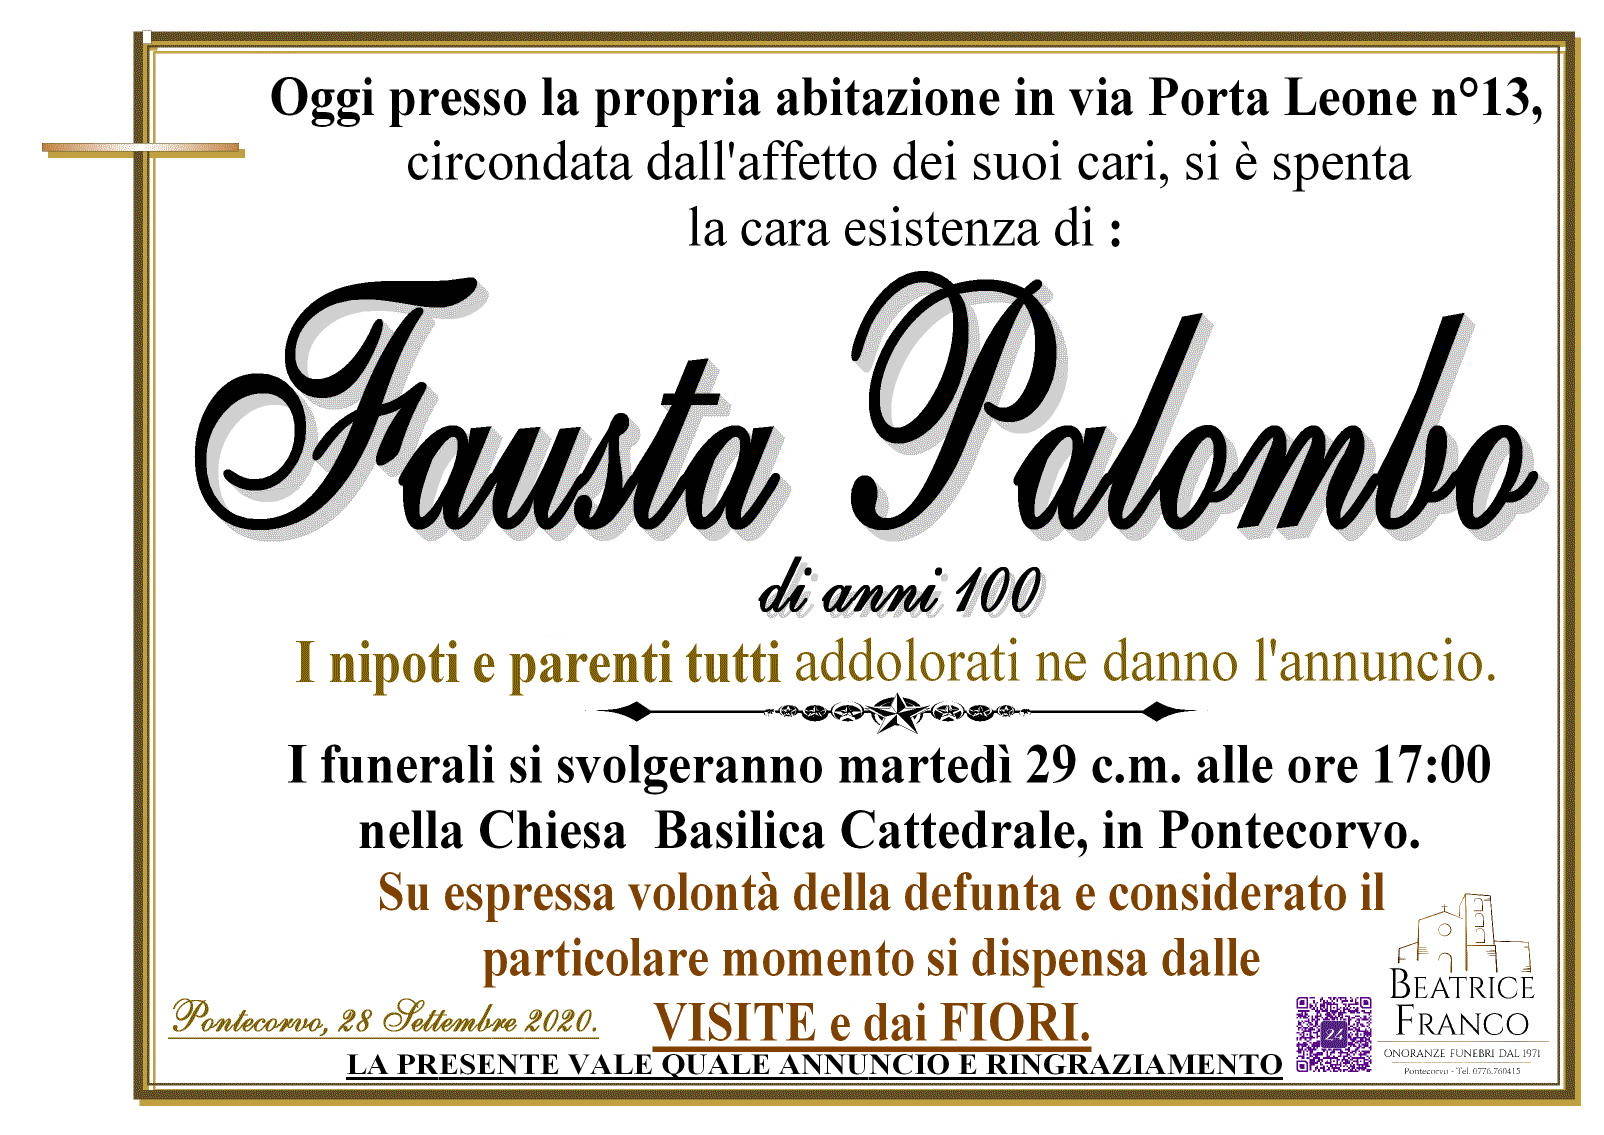 Fausta Palombo